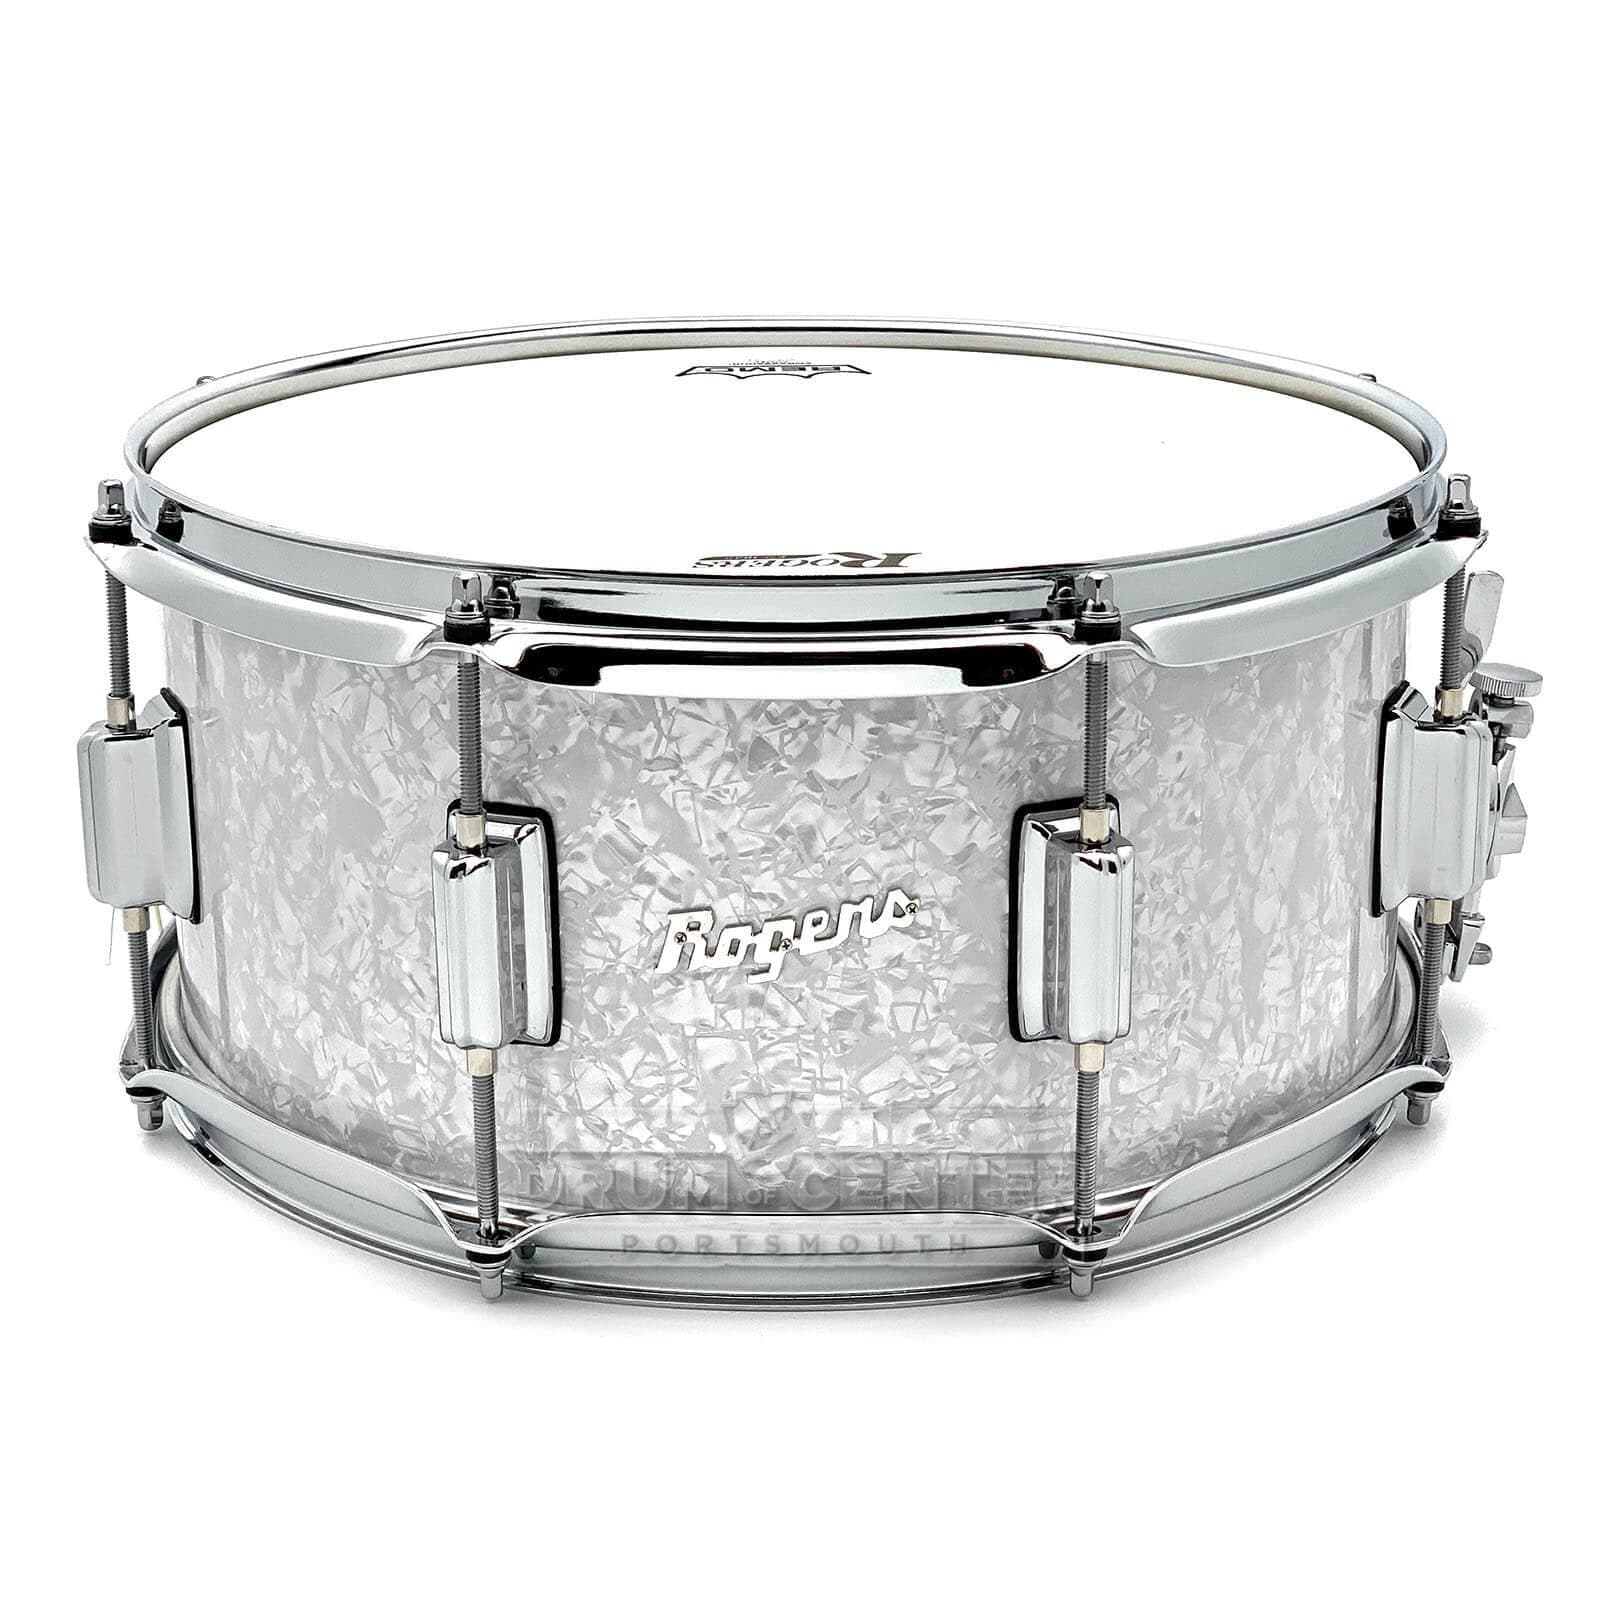 Dependable Performance hand drum cajon sanre adjustable music box